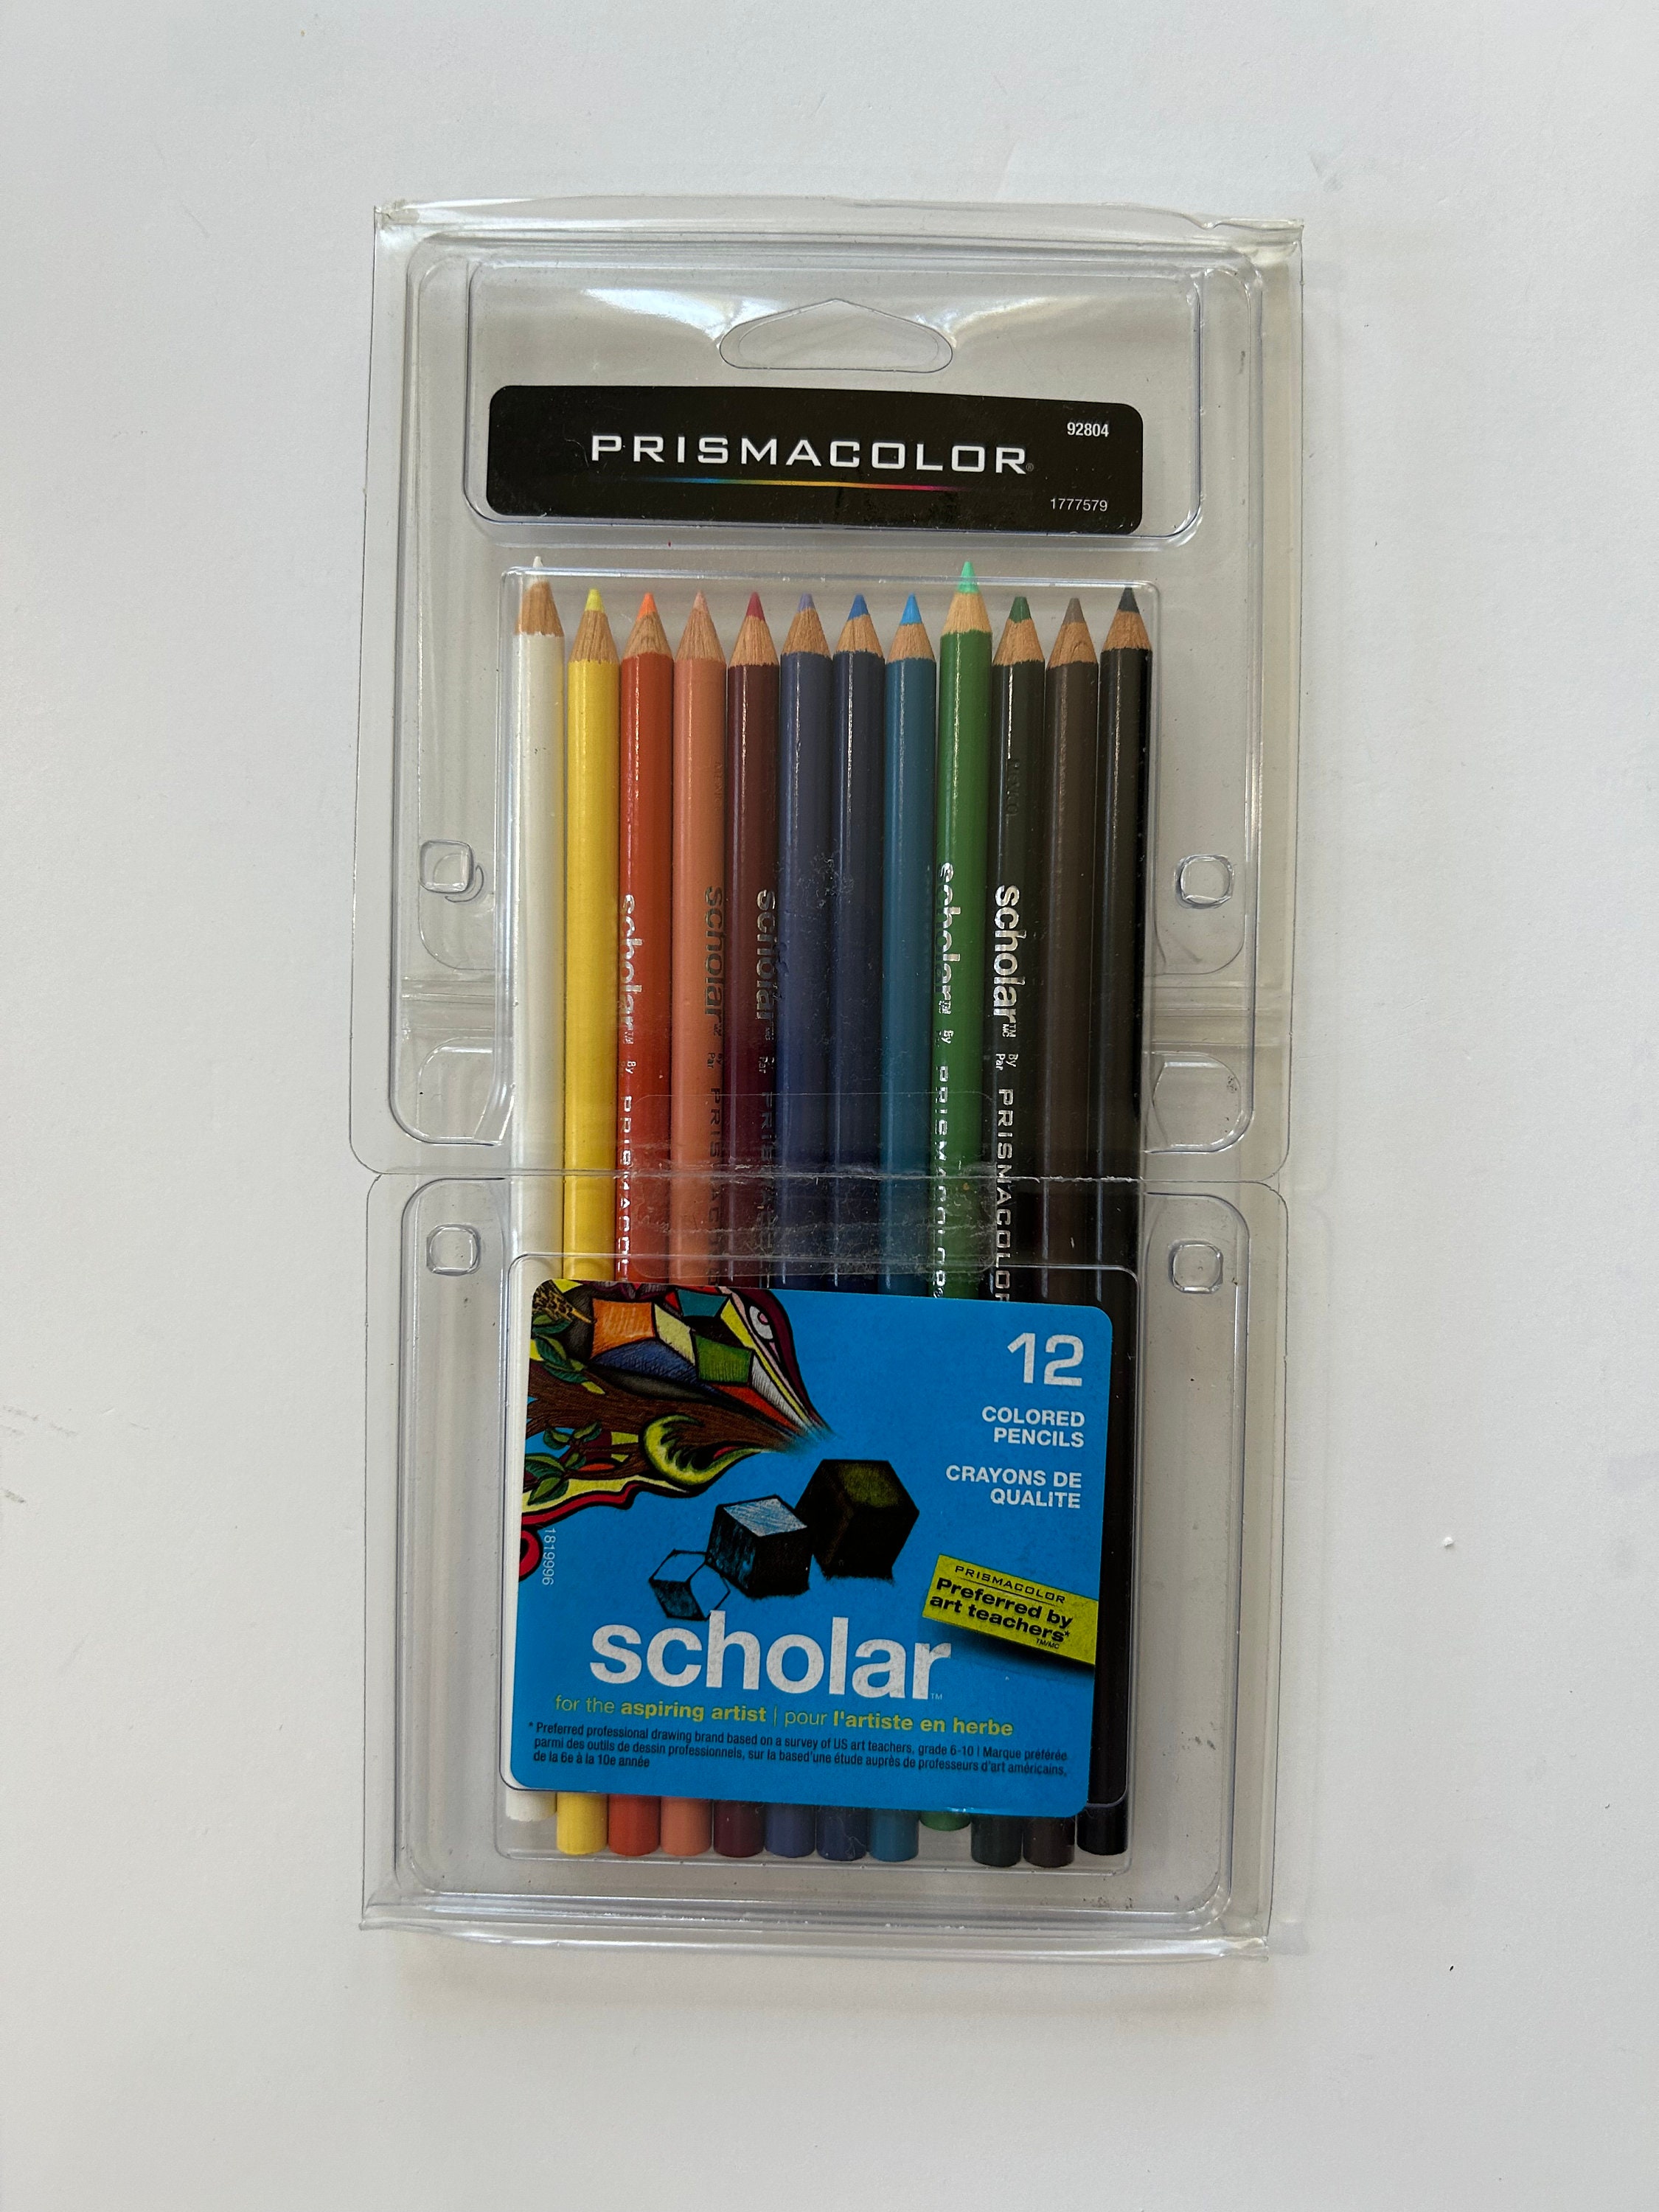 10 Prismacolor Markers, Bullet Tip, Point Prismacolor Scholar Art